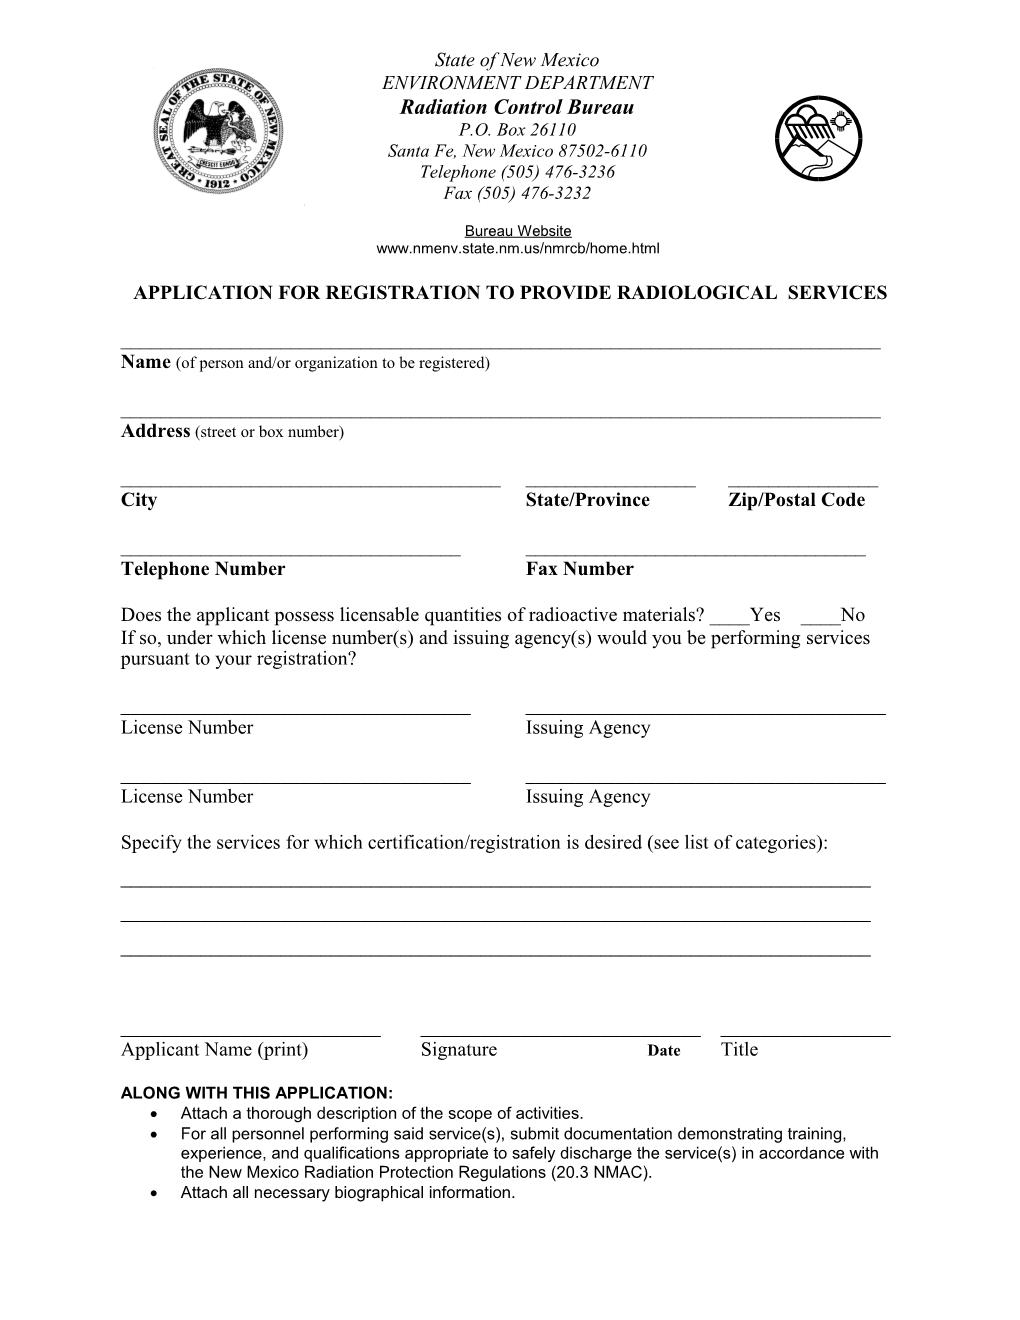 Radiation Licensing and Registration